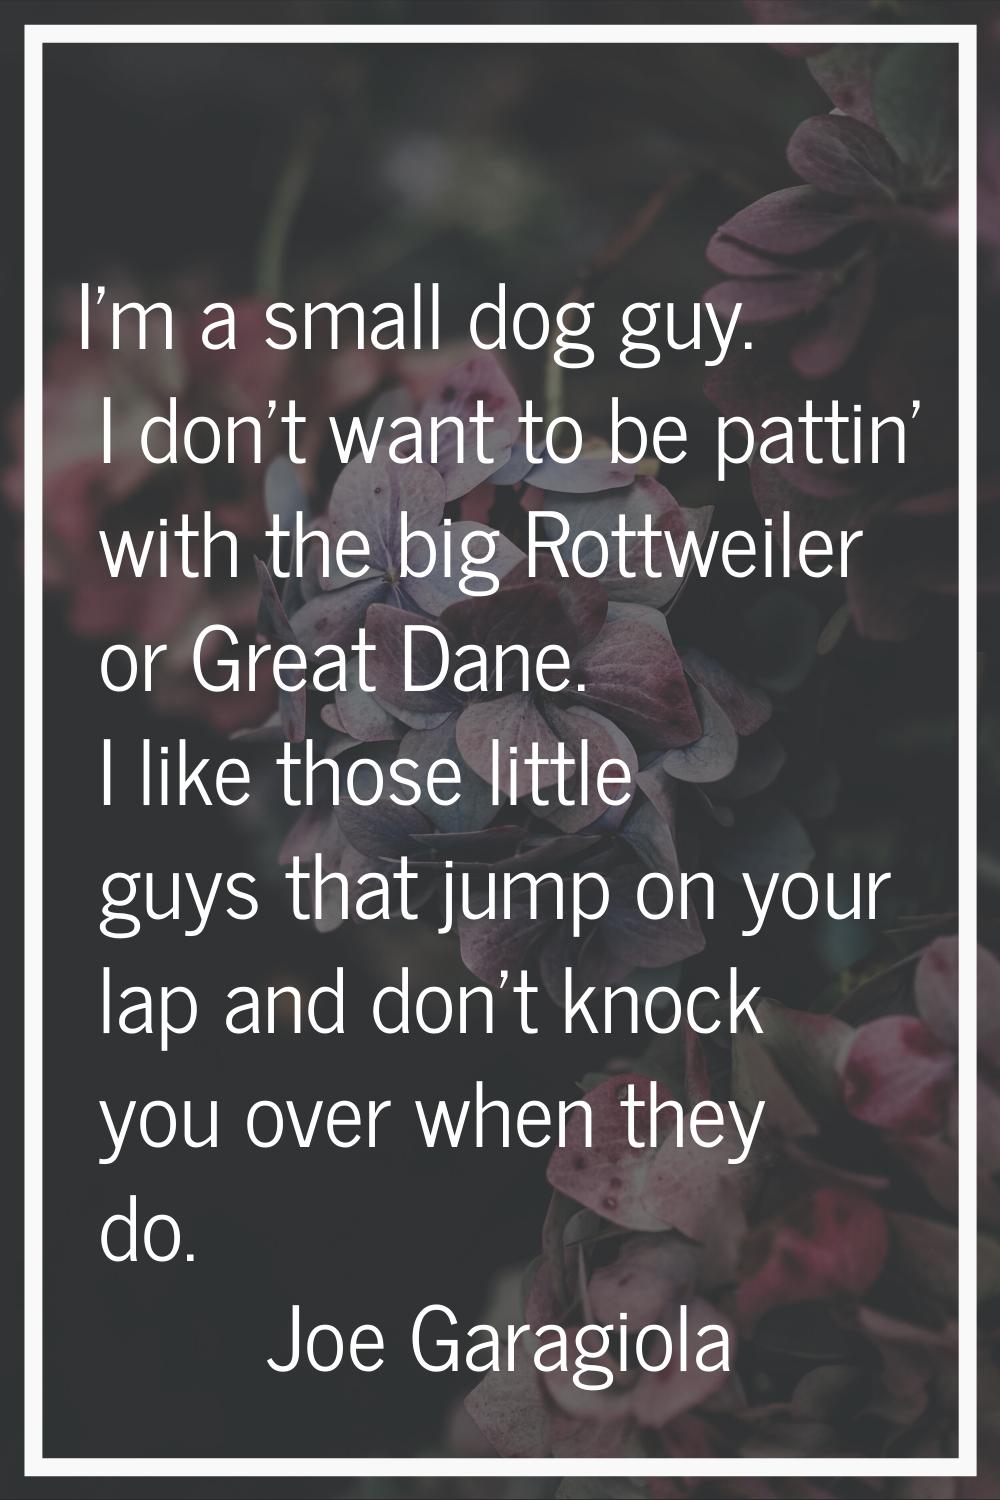 I'm a small dog guy. I don't want to be pattin' with the big Rottweiler or Great Dane. I like those